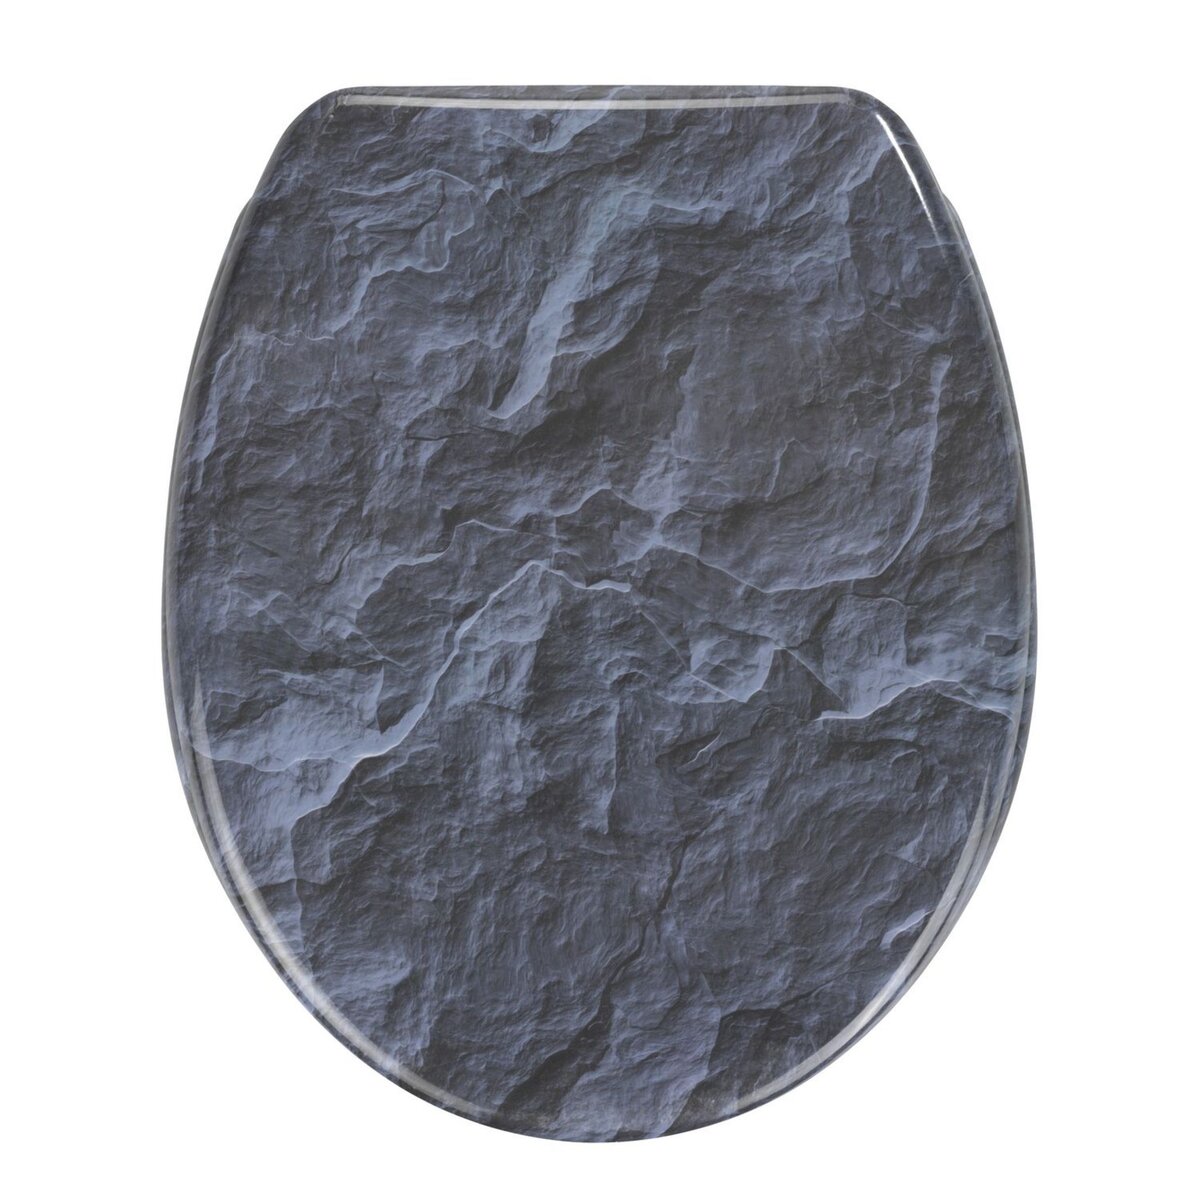 Wenko Abattant WC en duroplast design Slate - Gris anthracite